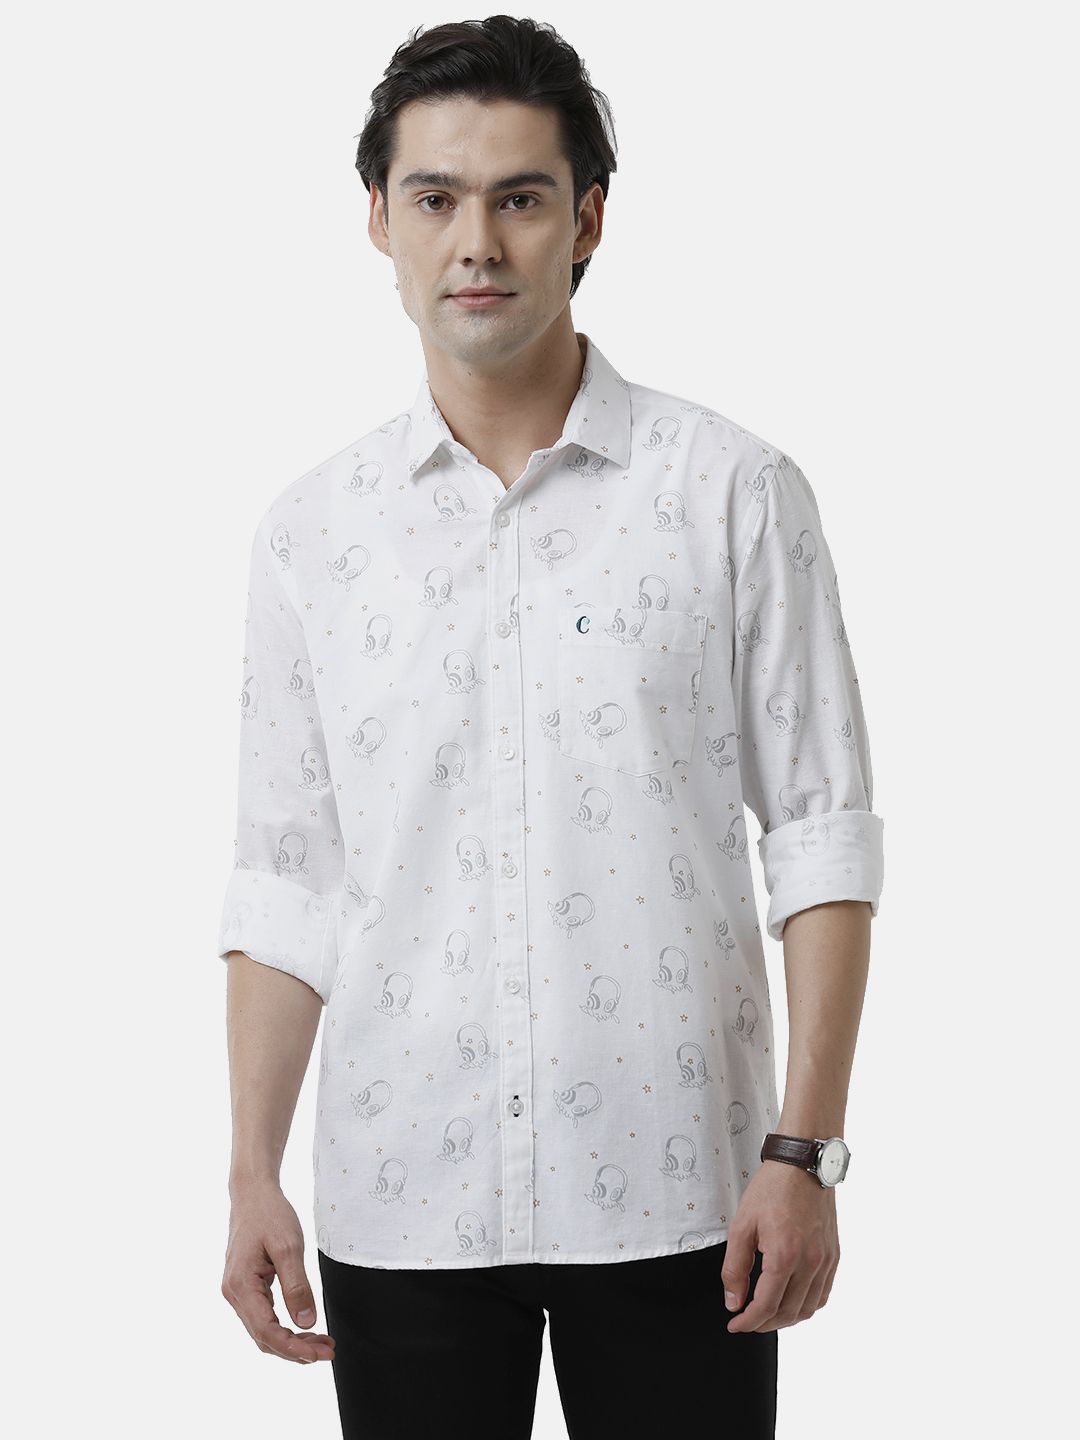 Cavallo By Linen Club Men's Cotton Linen ORANGE Printed Regular Fit Full  Sleeve Casual Shirt